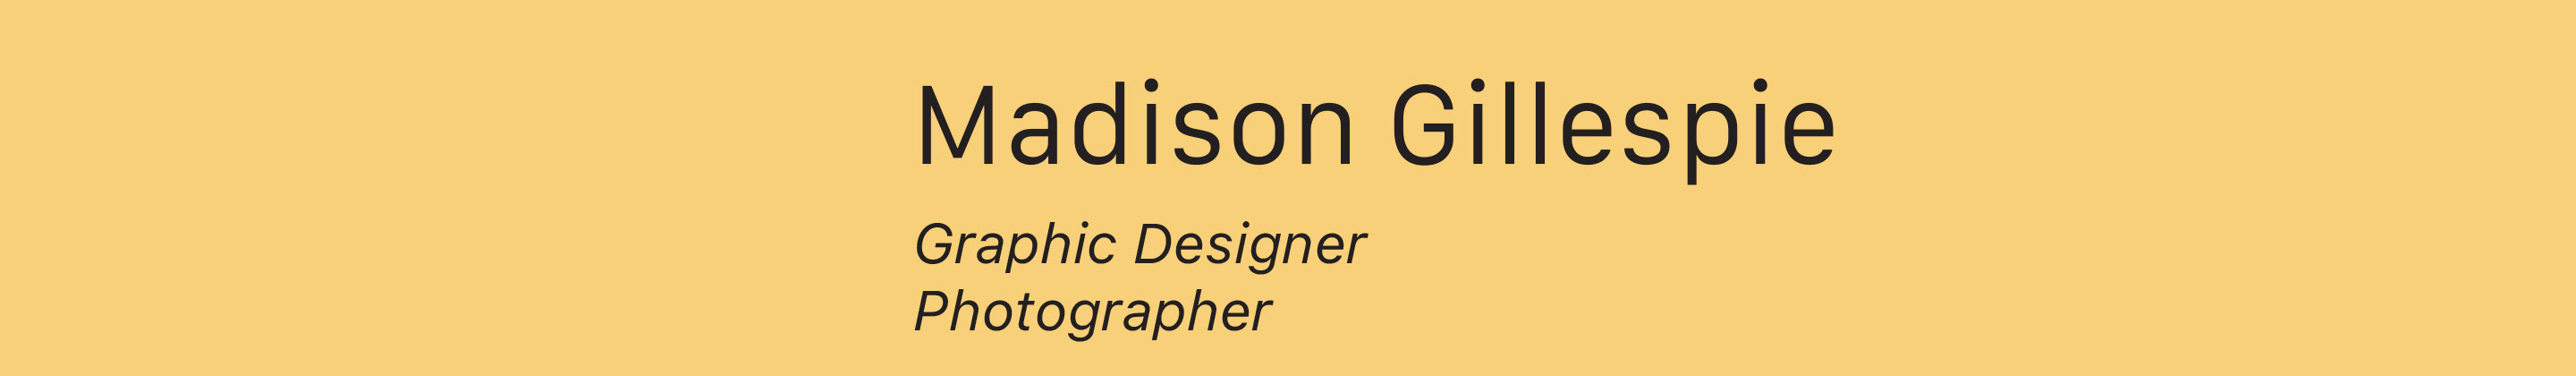 Madison Gillespie's profile banner